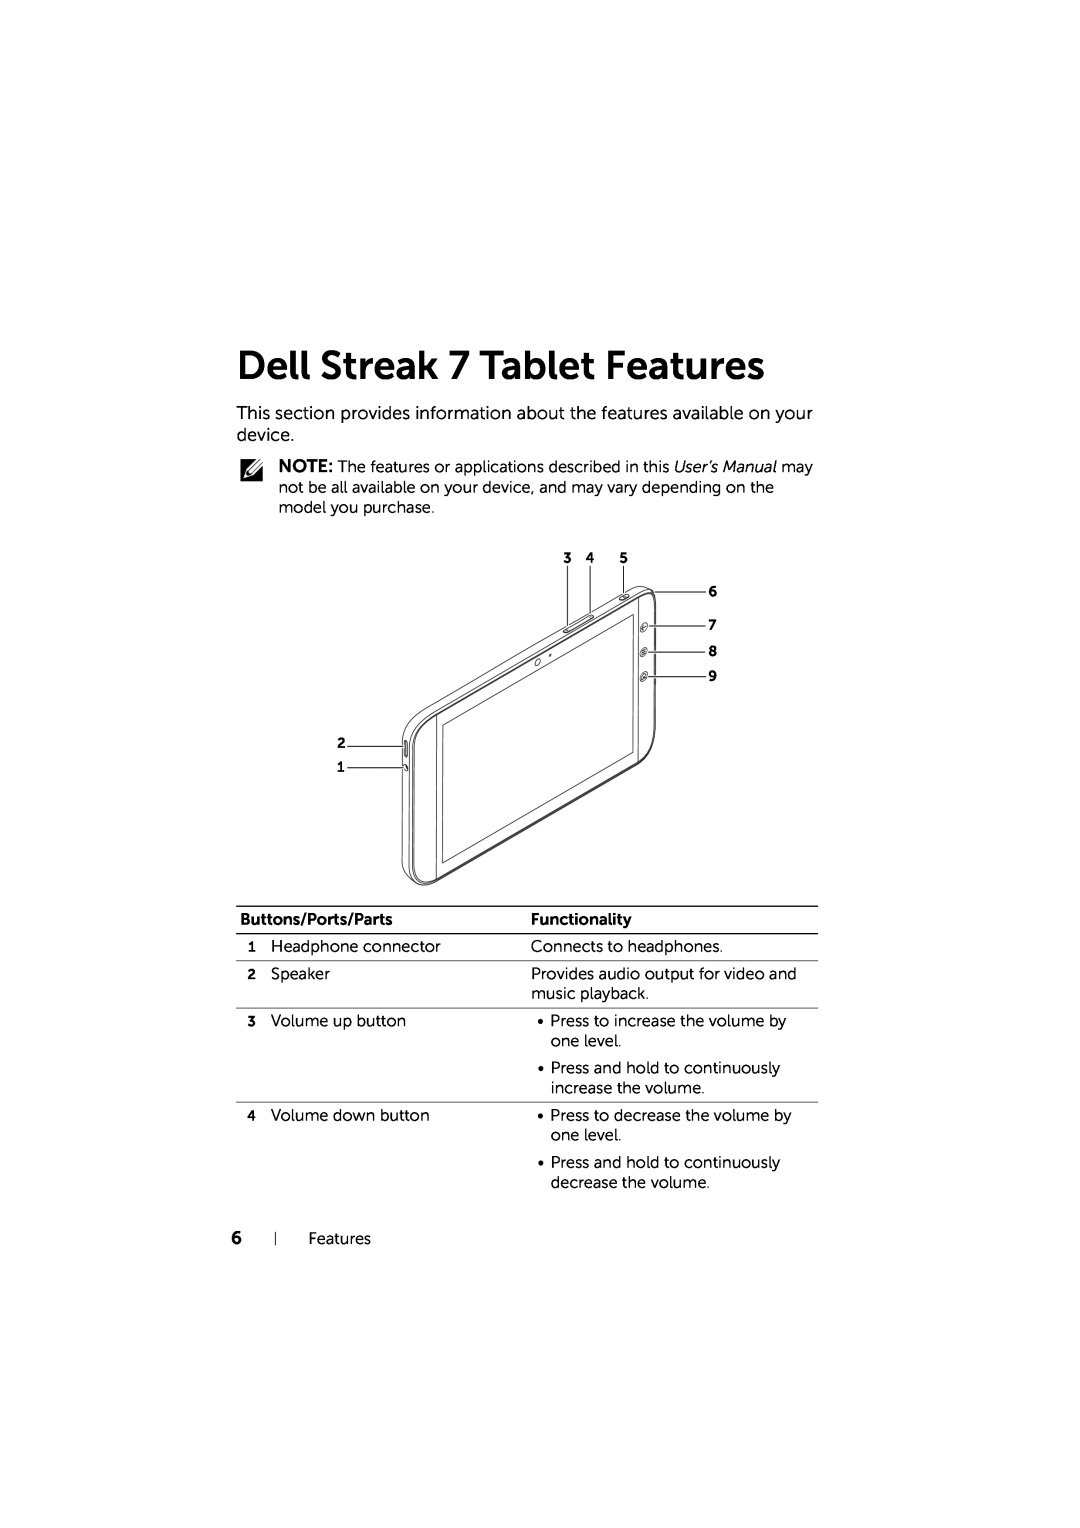 Dell LG7_bk0 user manual Dell Streak 7 Tablet Features 